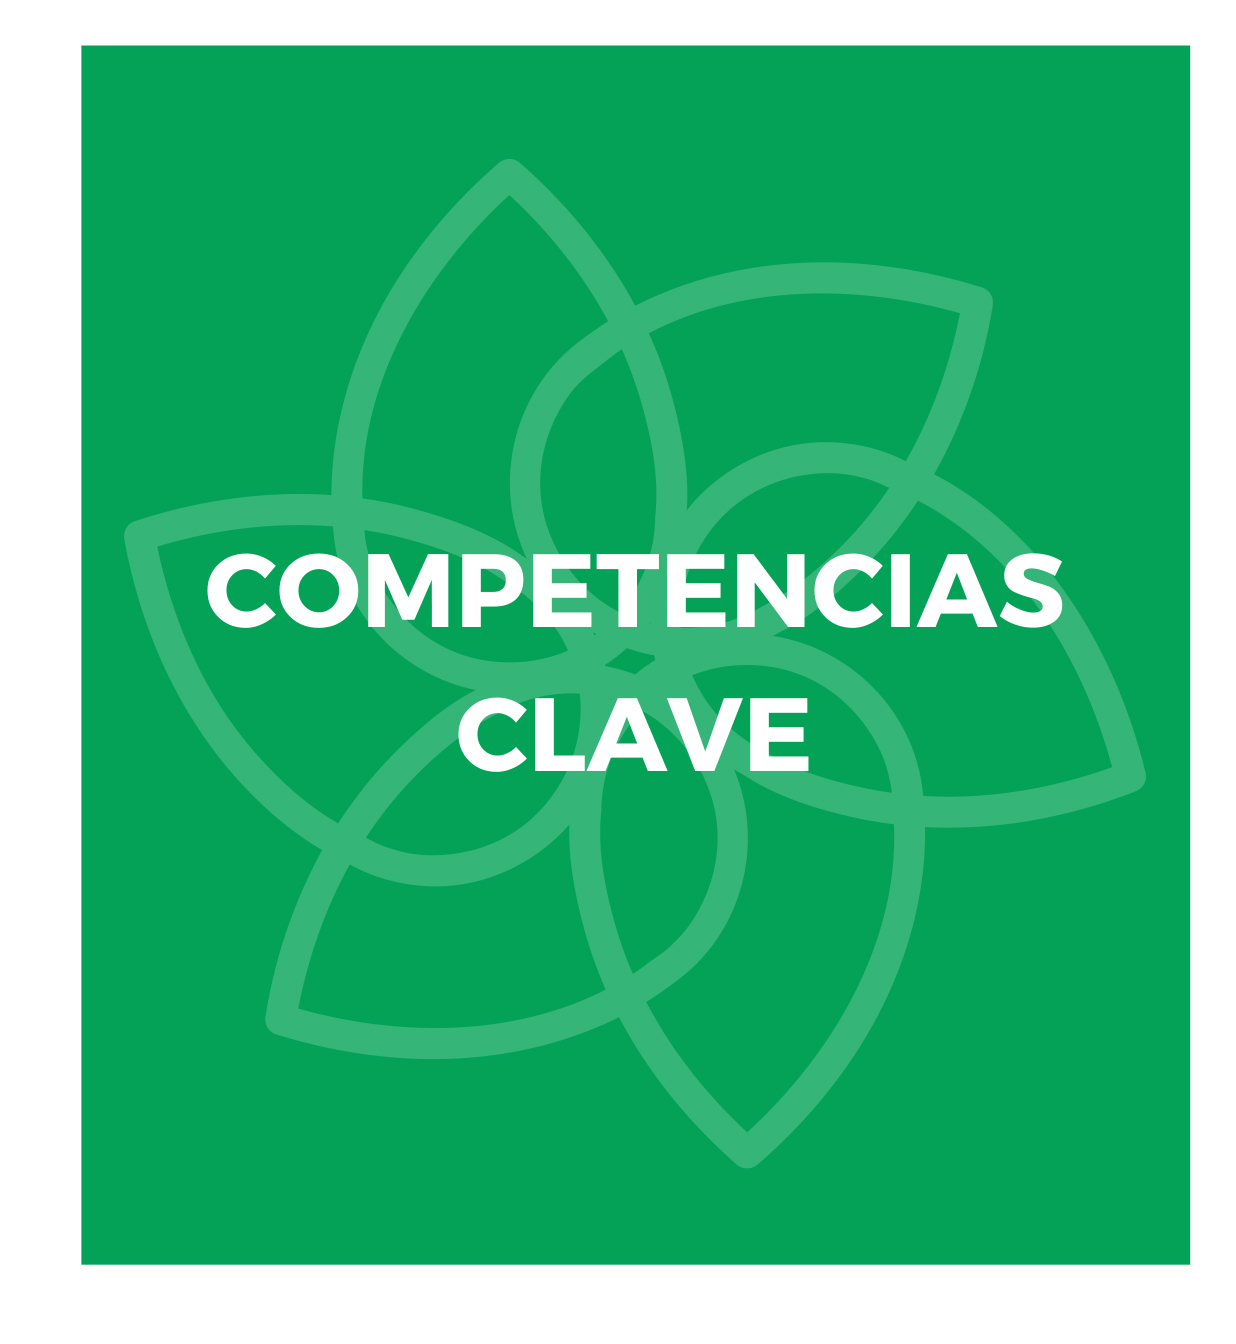 Competencias_n (6 COMPETENCIAS_N.jpg)